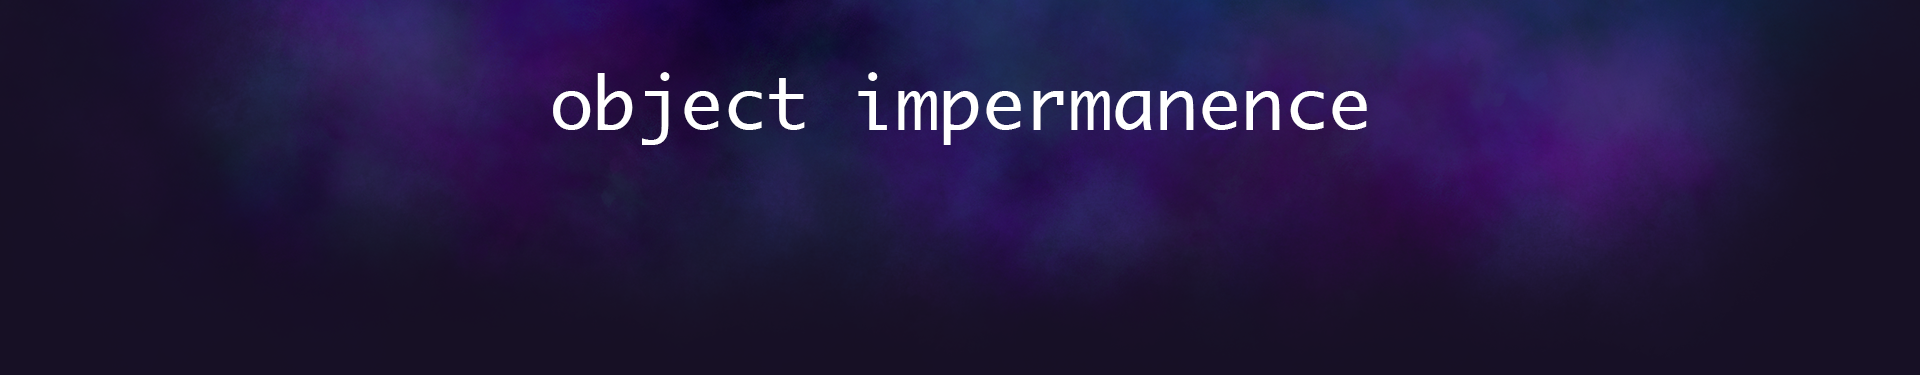 Object Impermanence